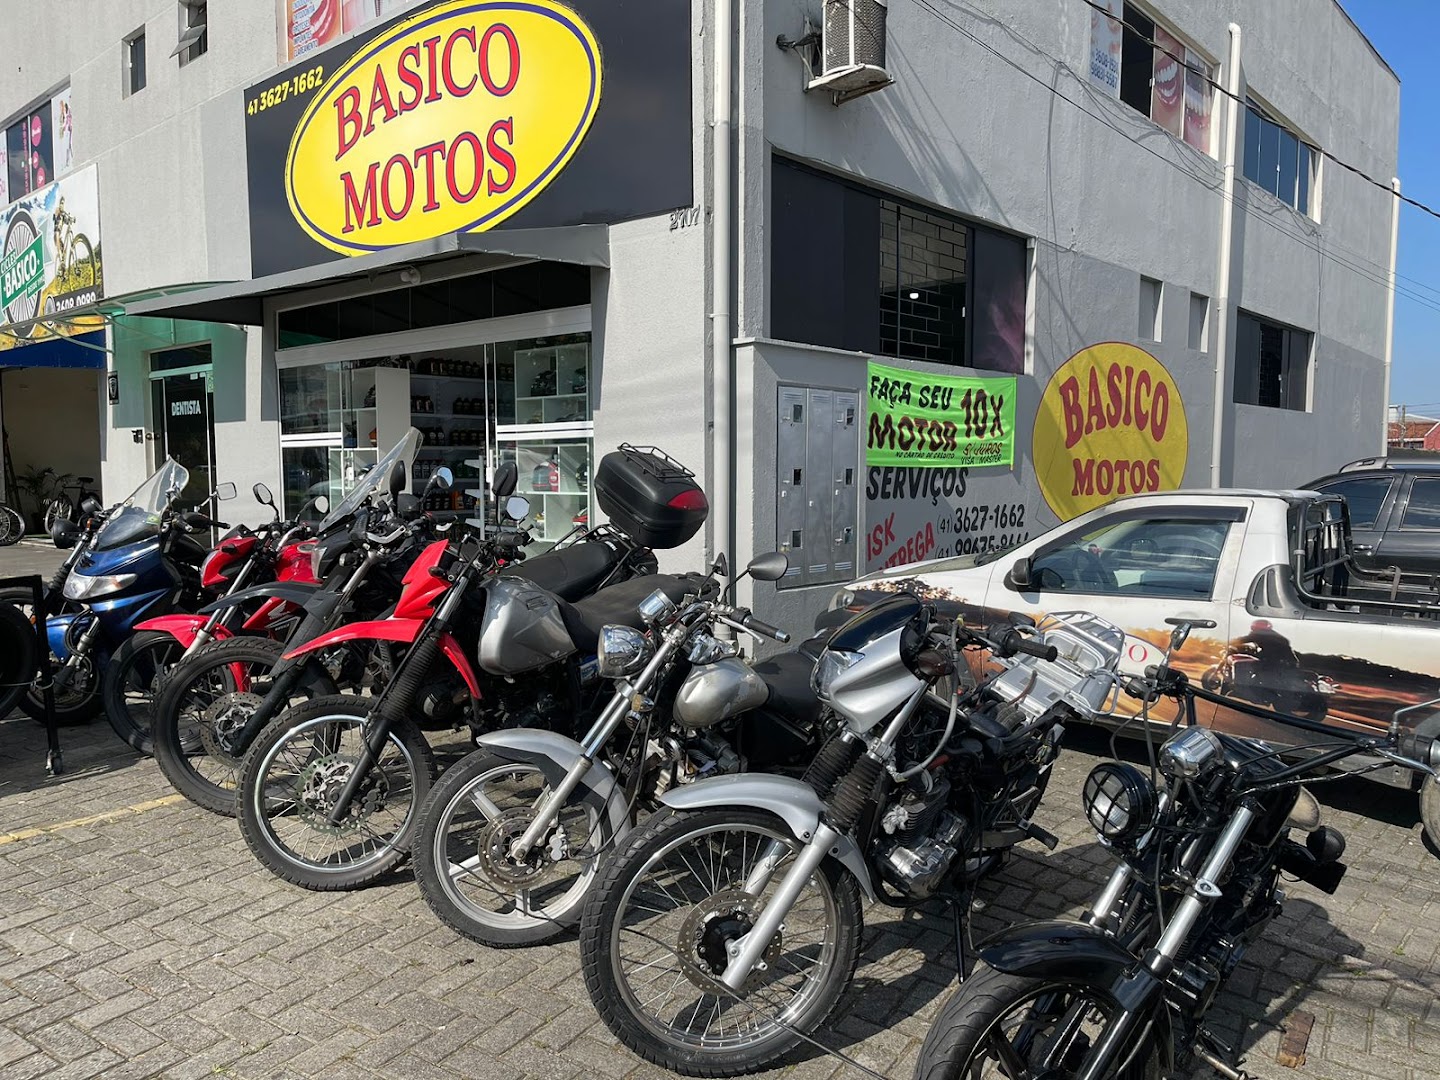 Motos - Jandira, São Paulo